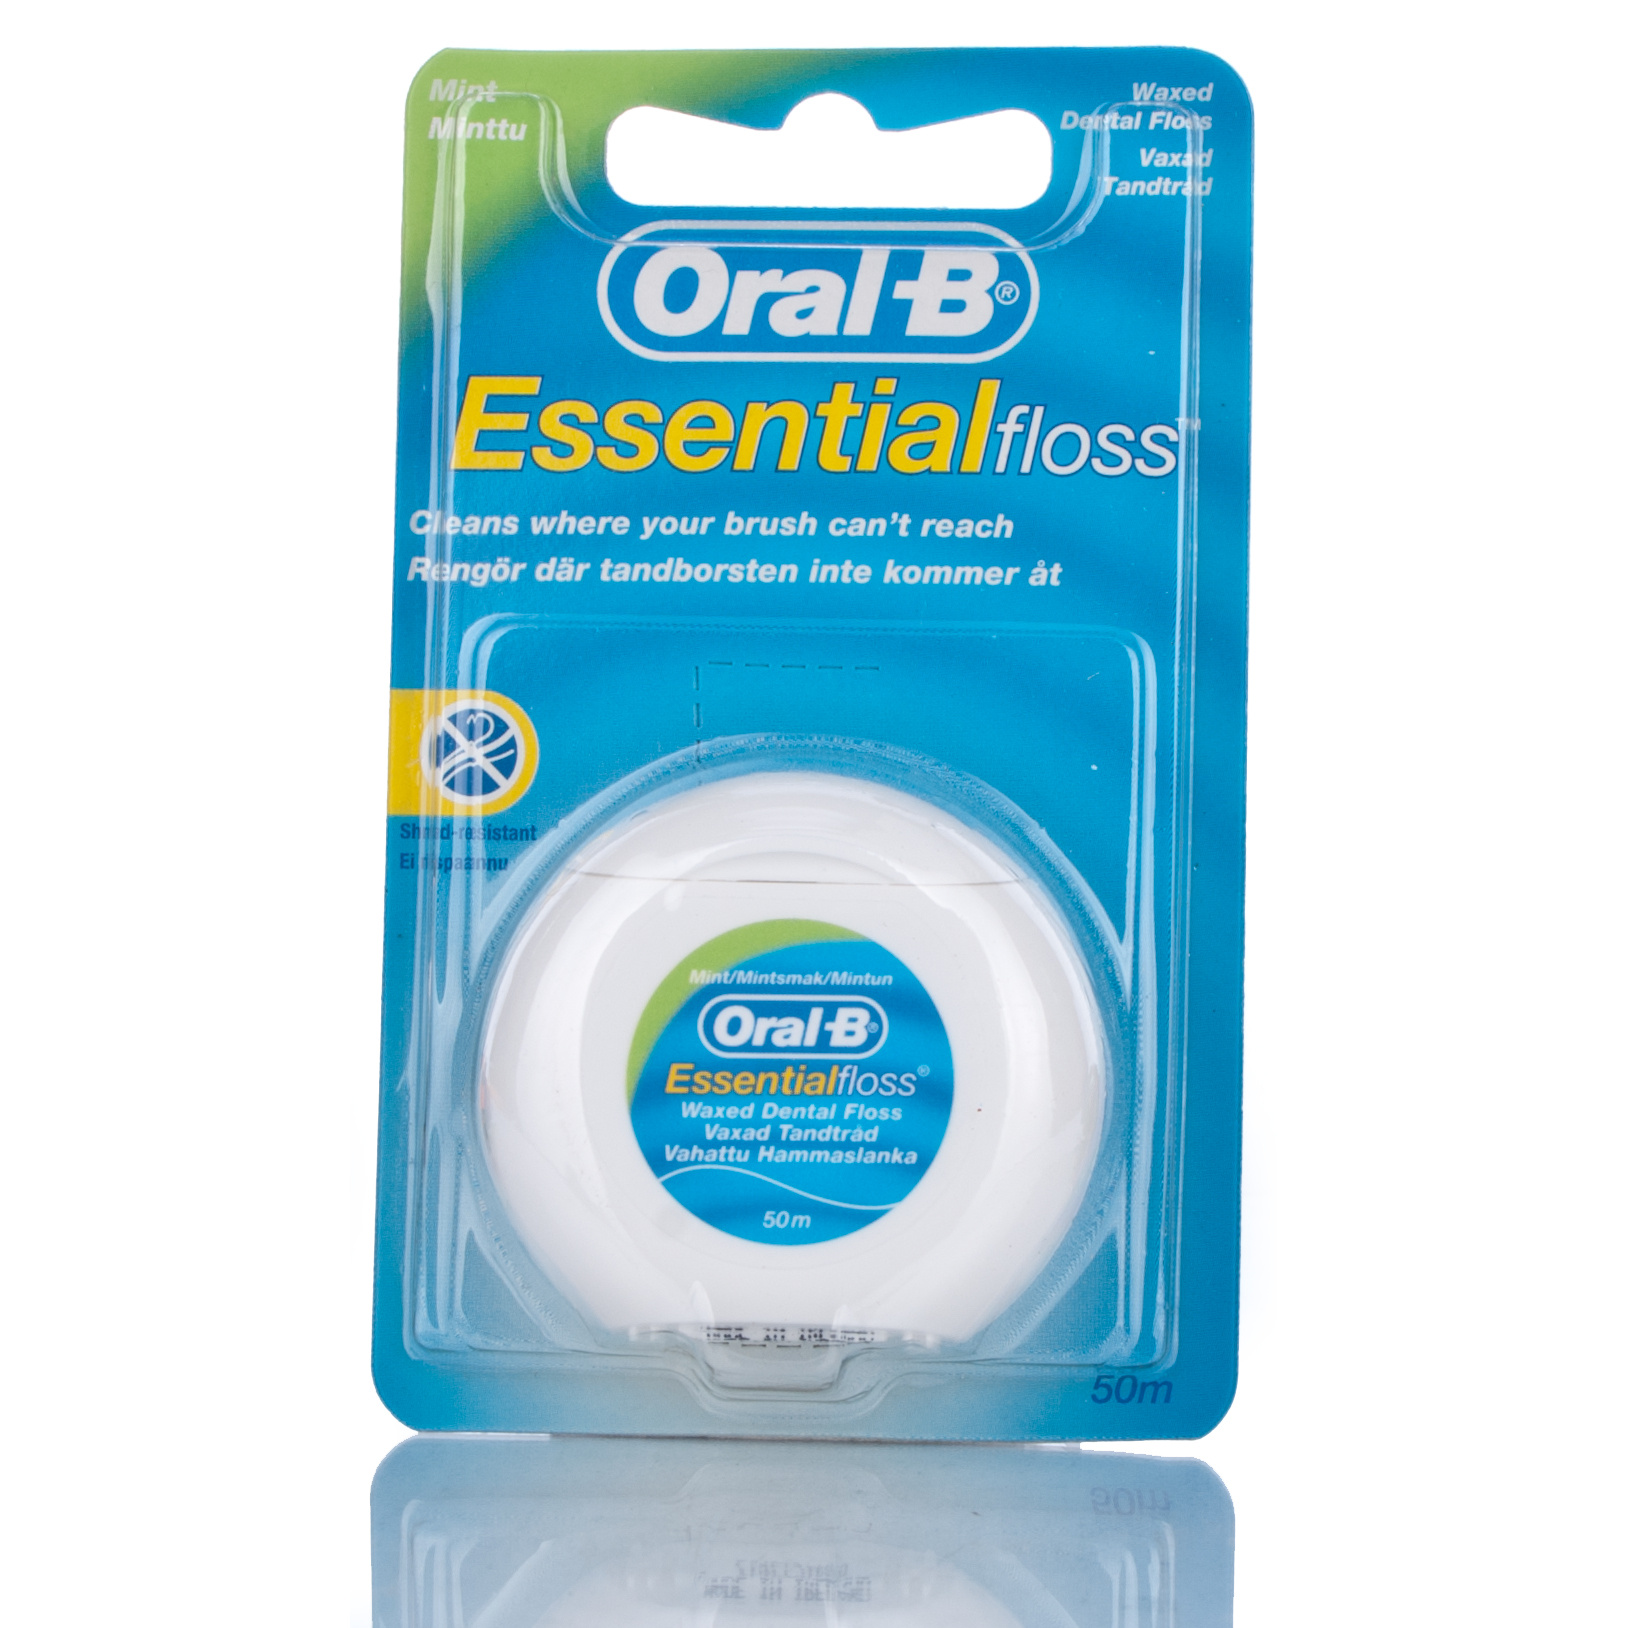 Oral-B Essential Waxed Dental Floss